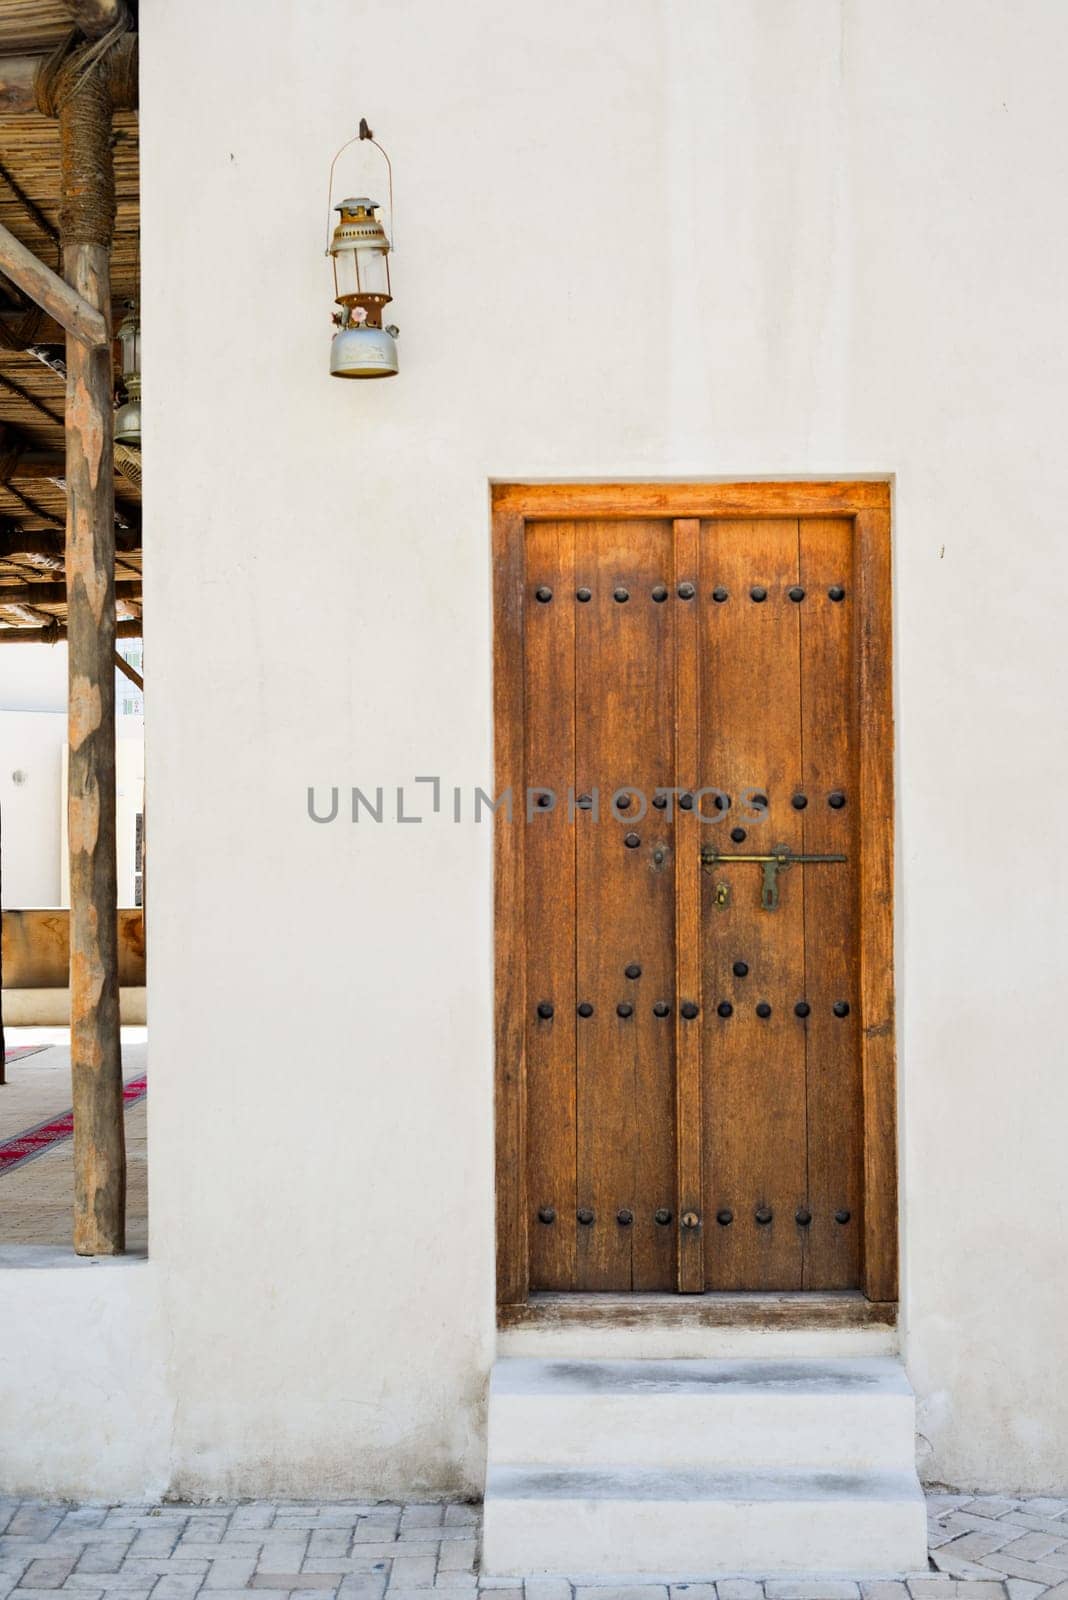 Arabic style carved wooden doors in Al Fahidi Historical District, Deira, Dubai, United Arab Emirates. by Ekaterina34